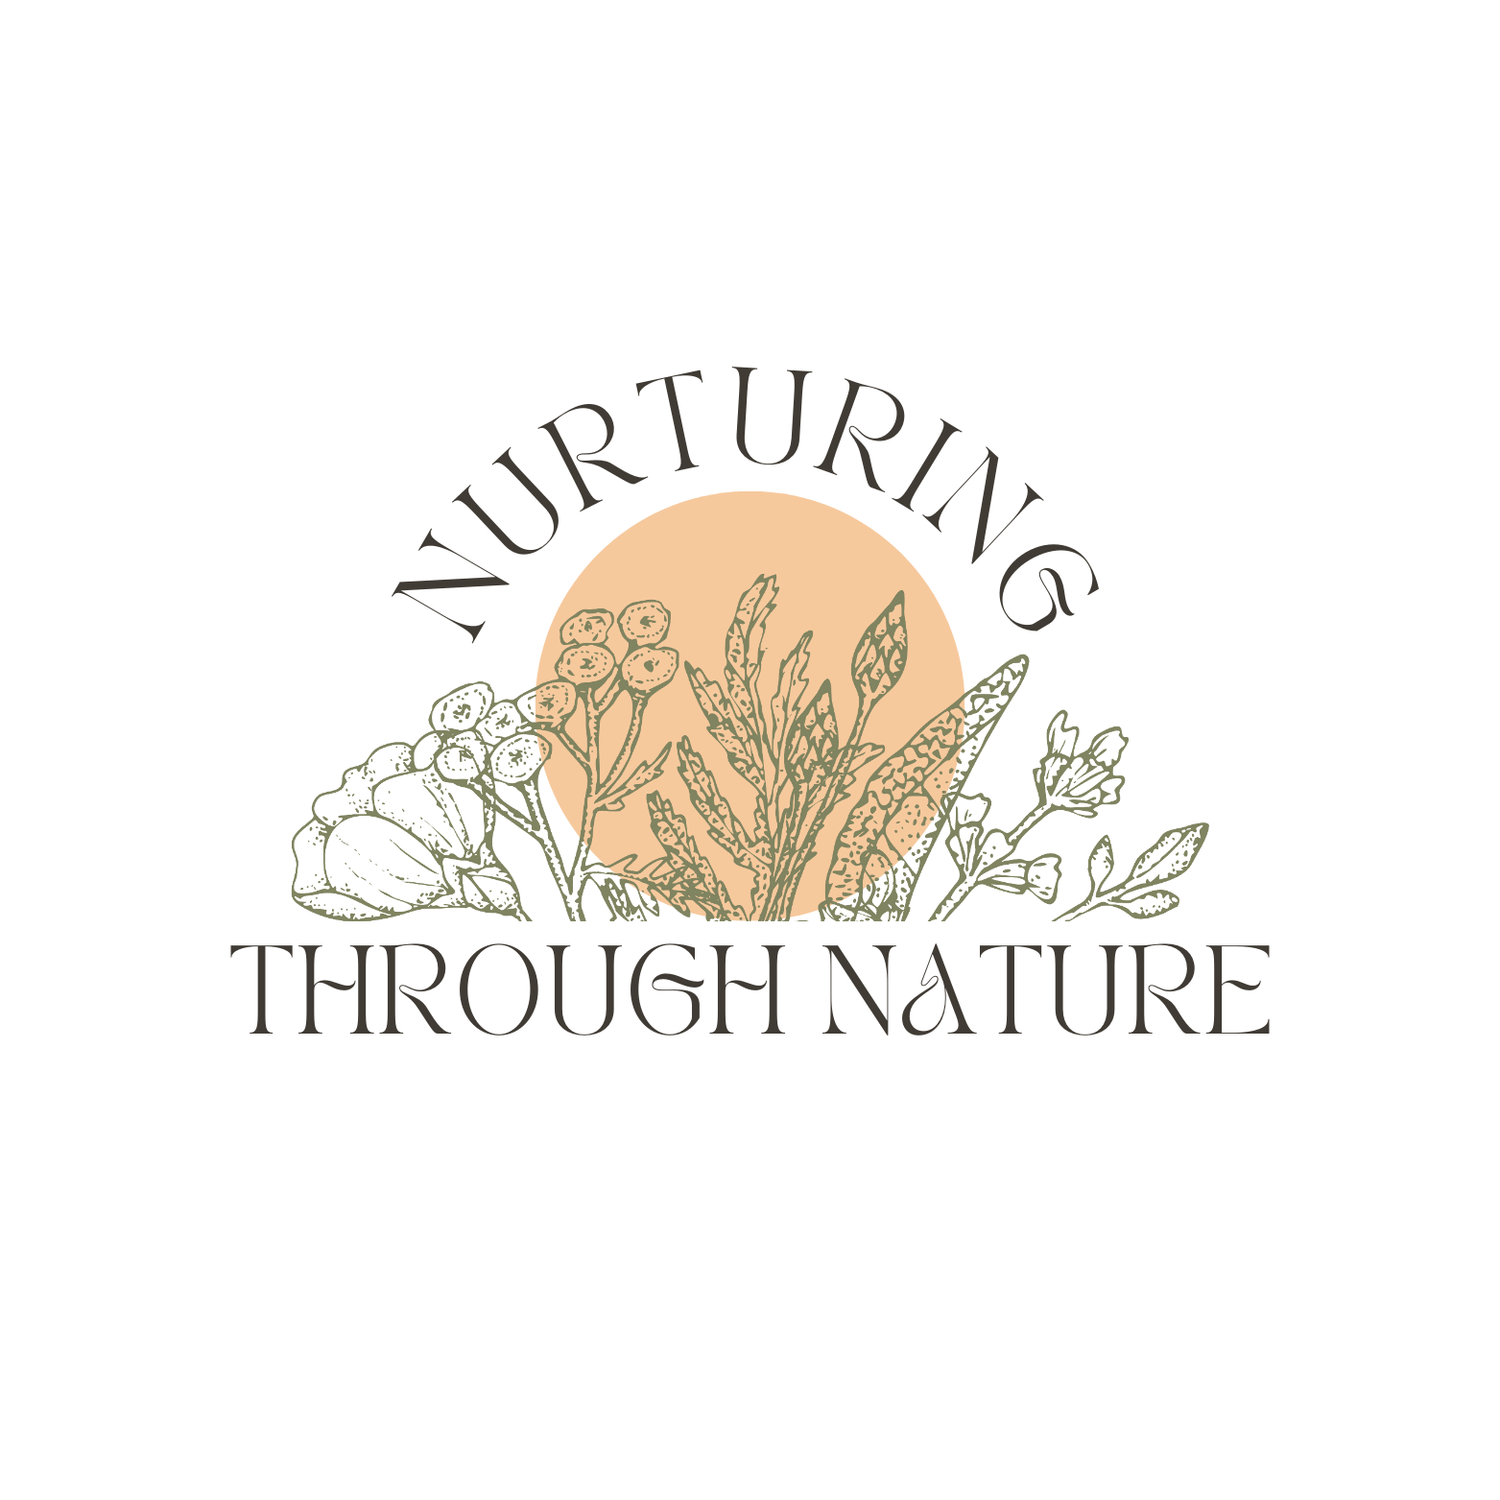 Nurturing through Nature